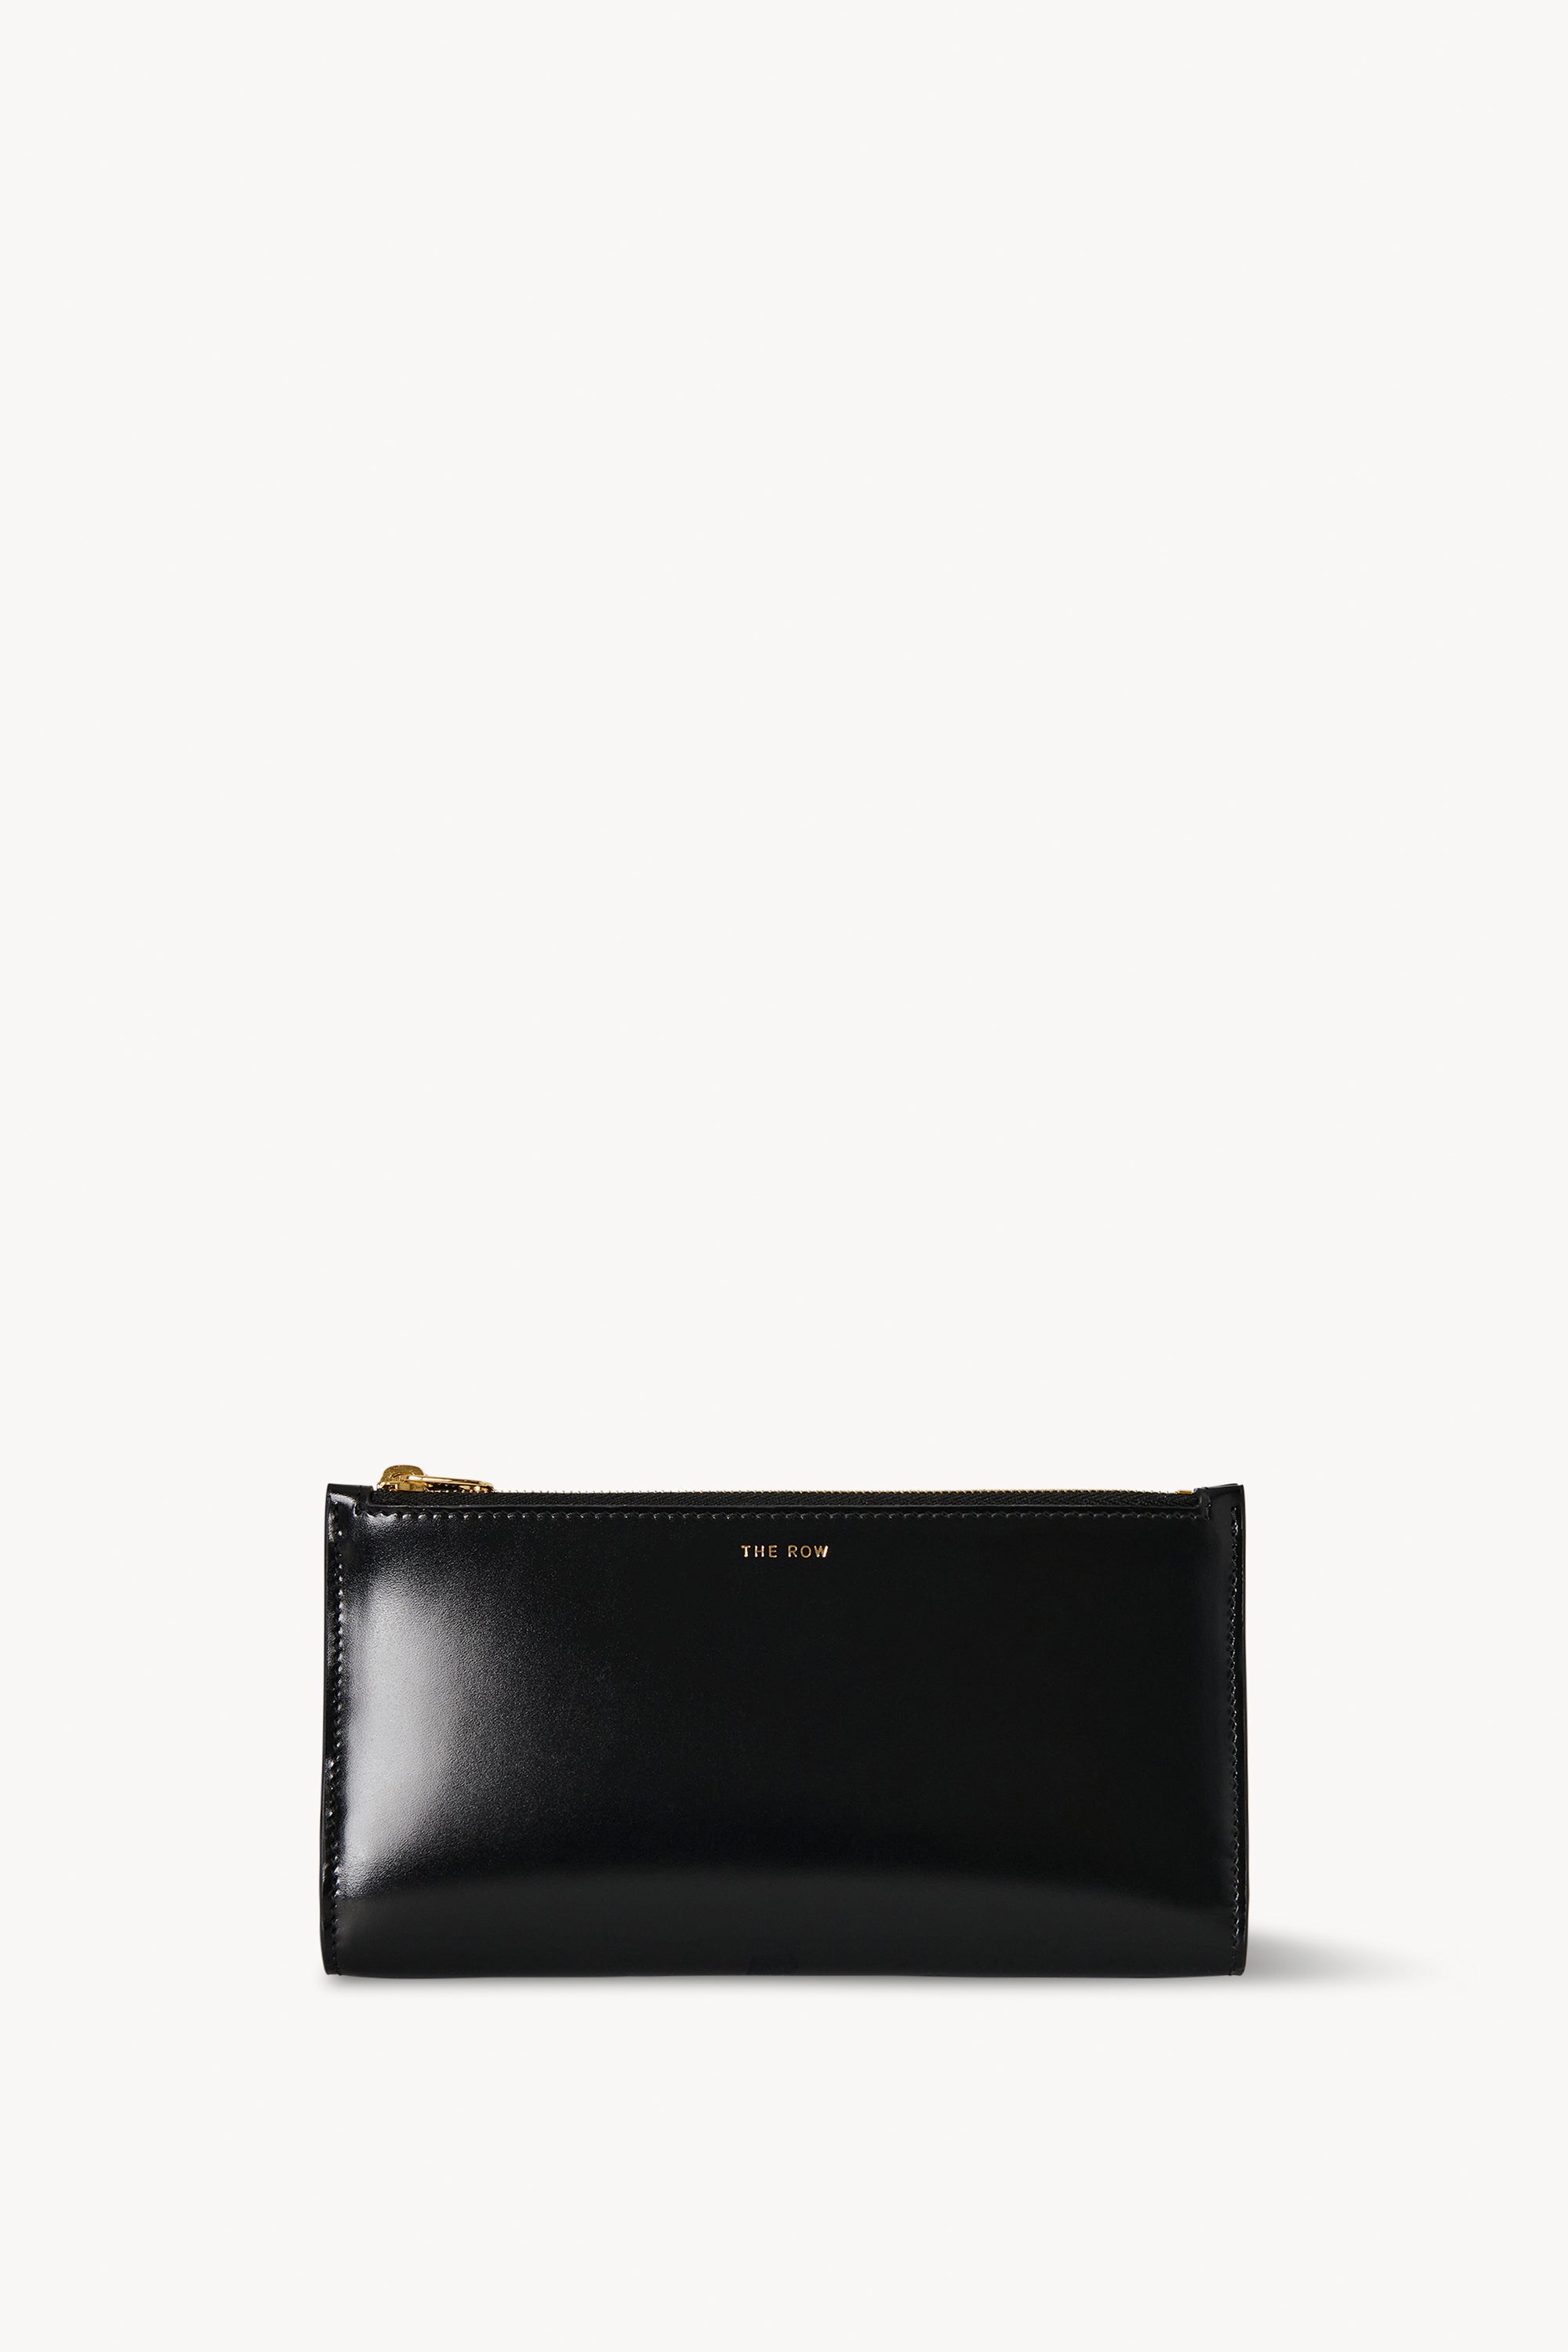 The Row Multi Zipped Wallet in Cognac LG